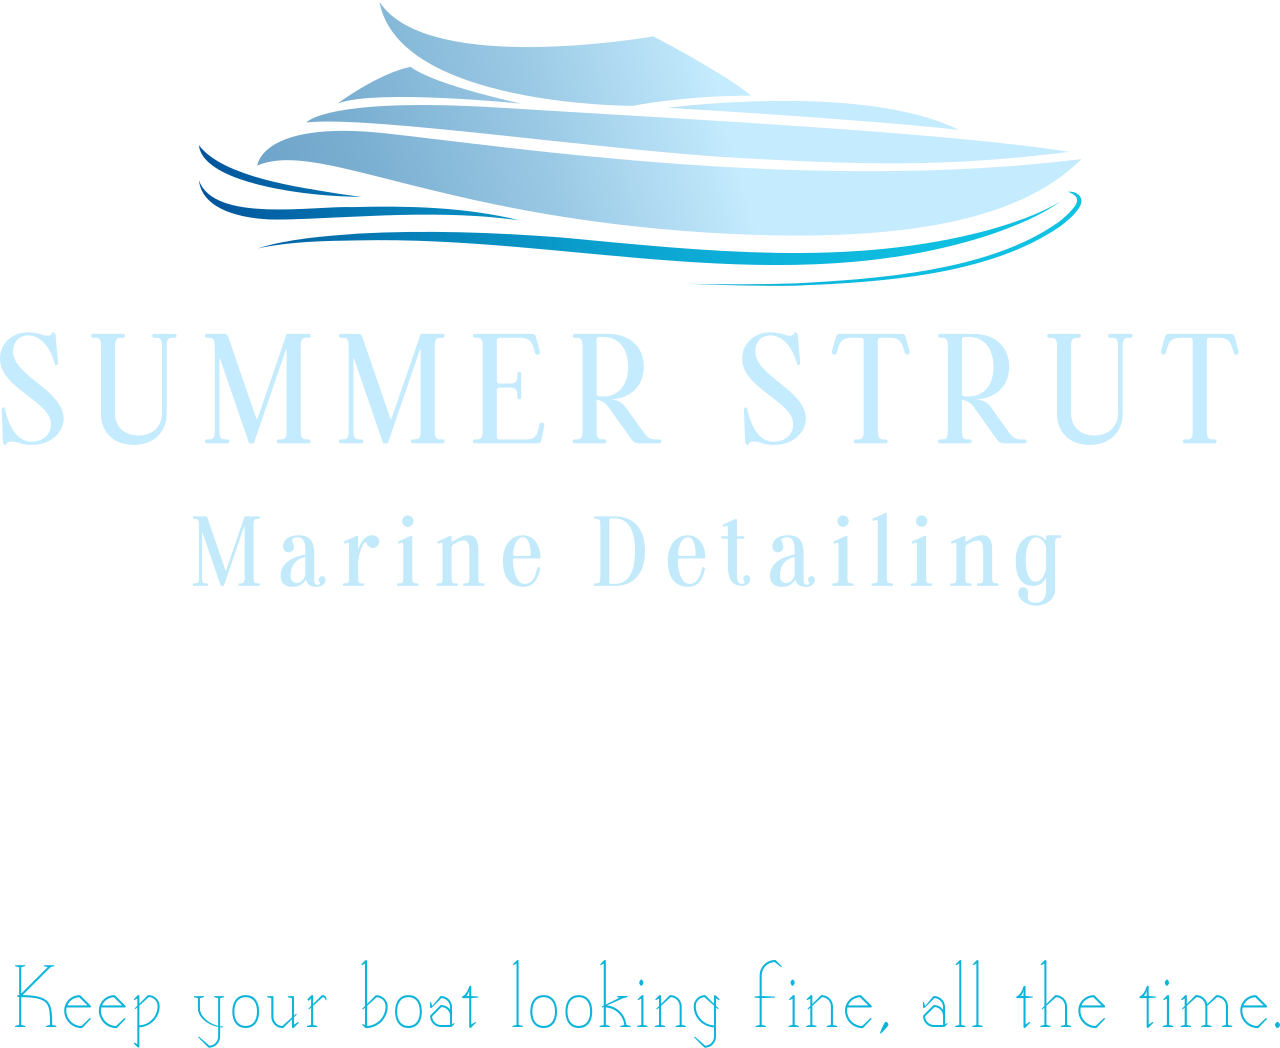 Summer Strut 's web page